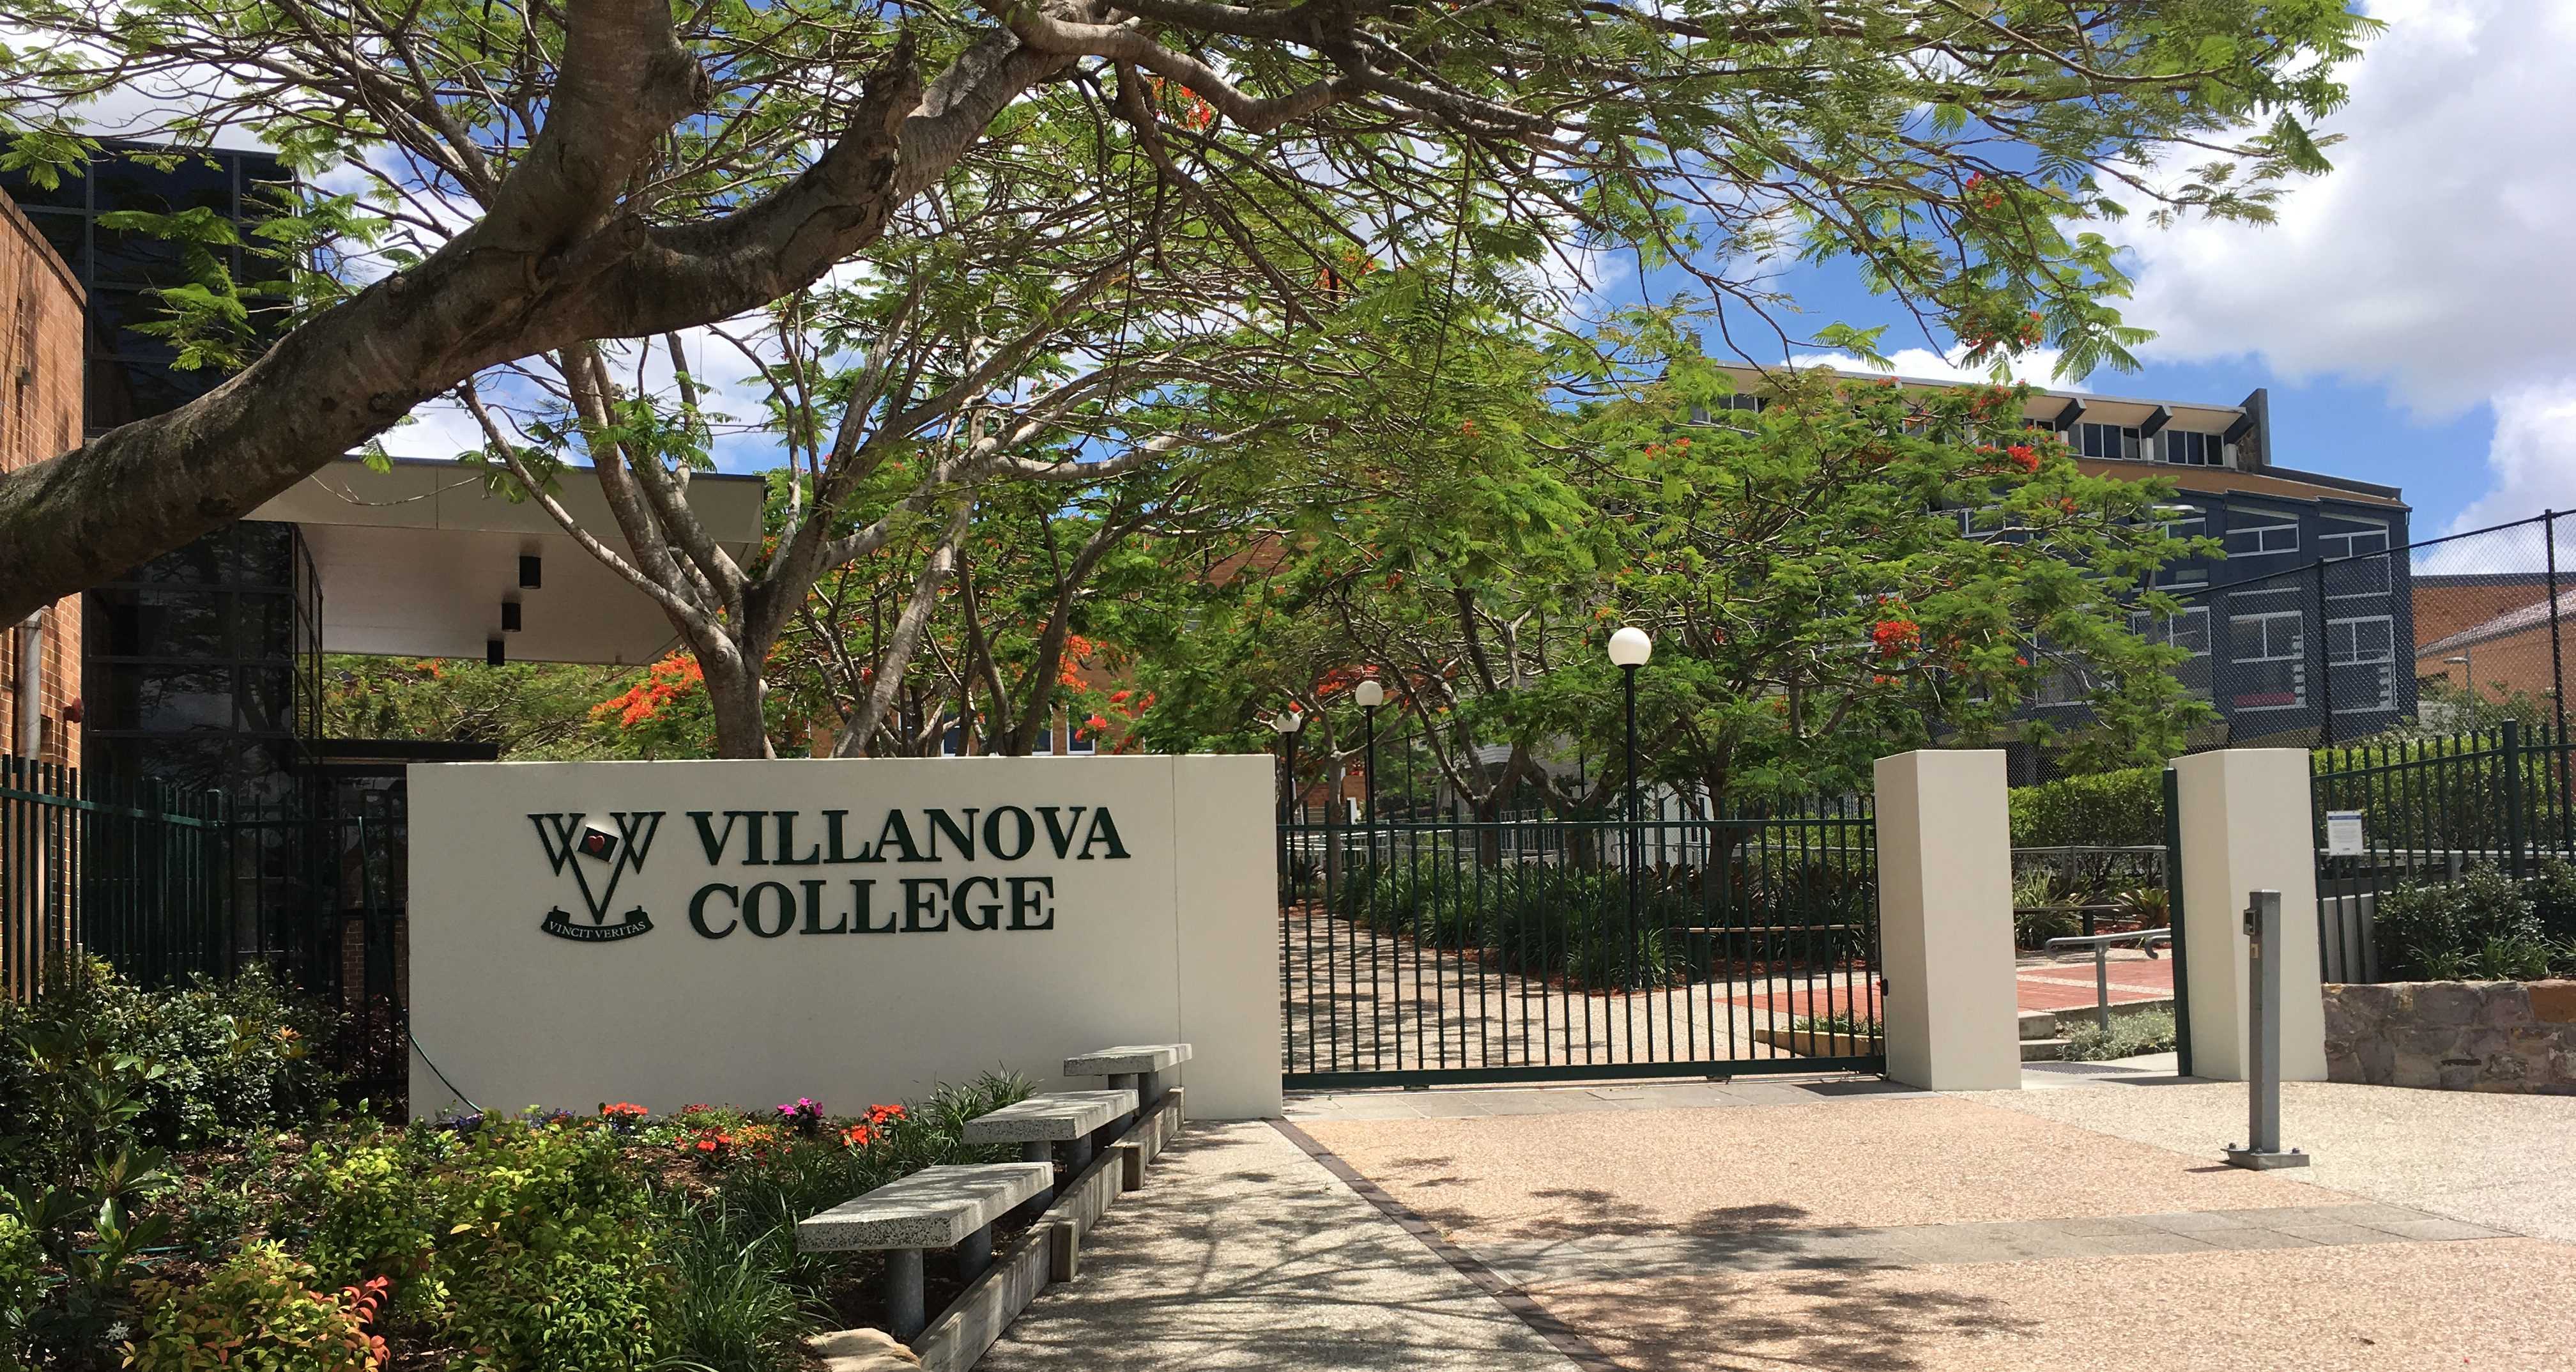 The entrance to Villanova College, a short walk from Maasra.